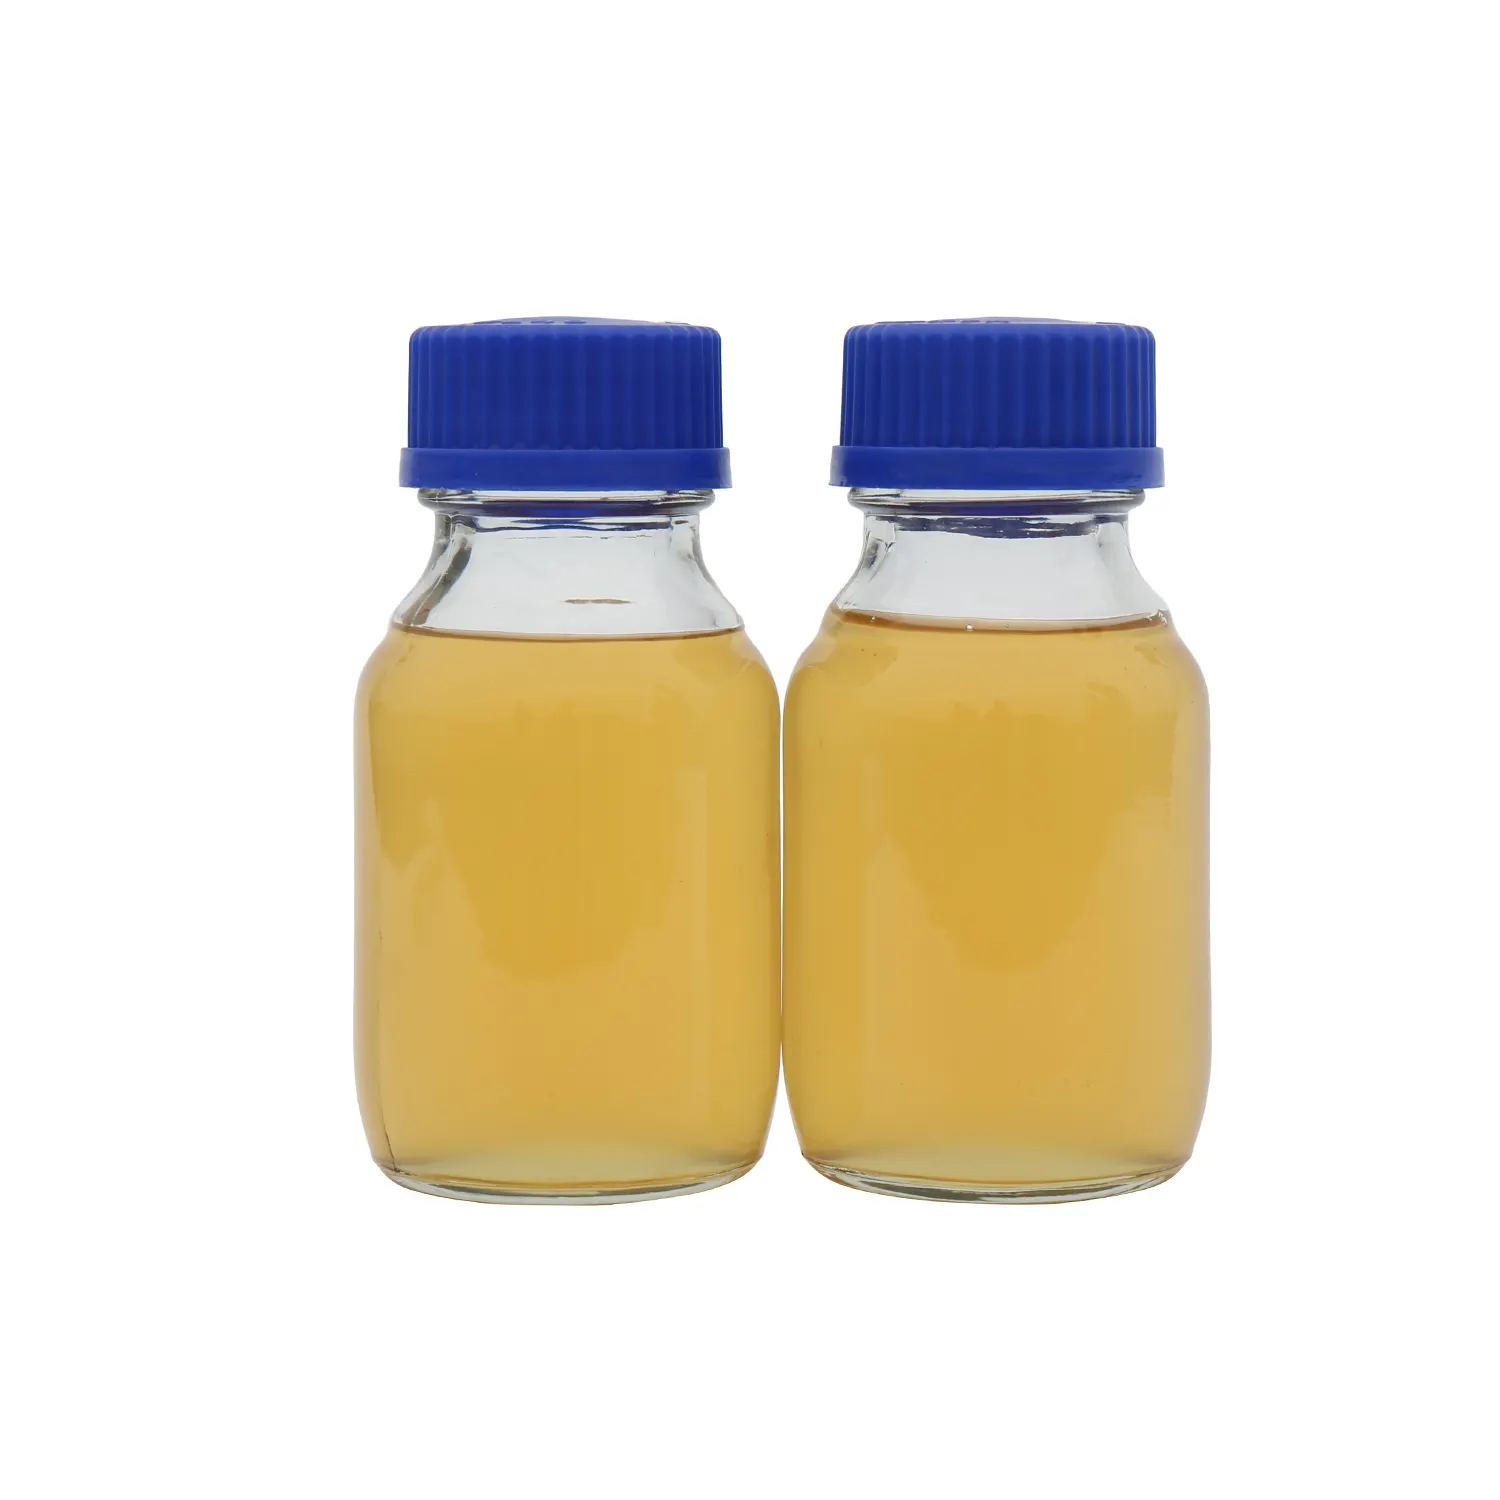 Chloroprene Contact Adhesive organic liquid contact adhesive all purpose adhesives glue Edible soybean oil smelless anti-aging